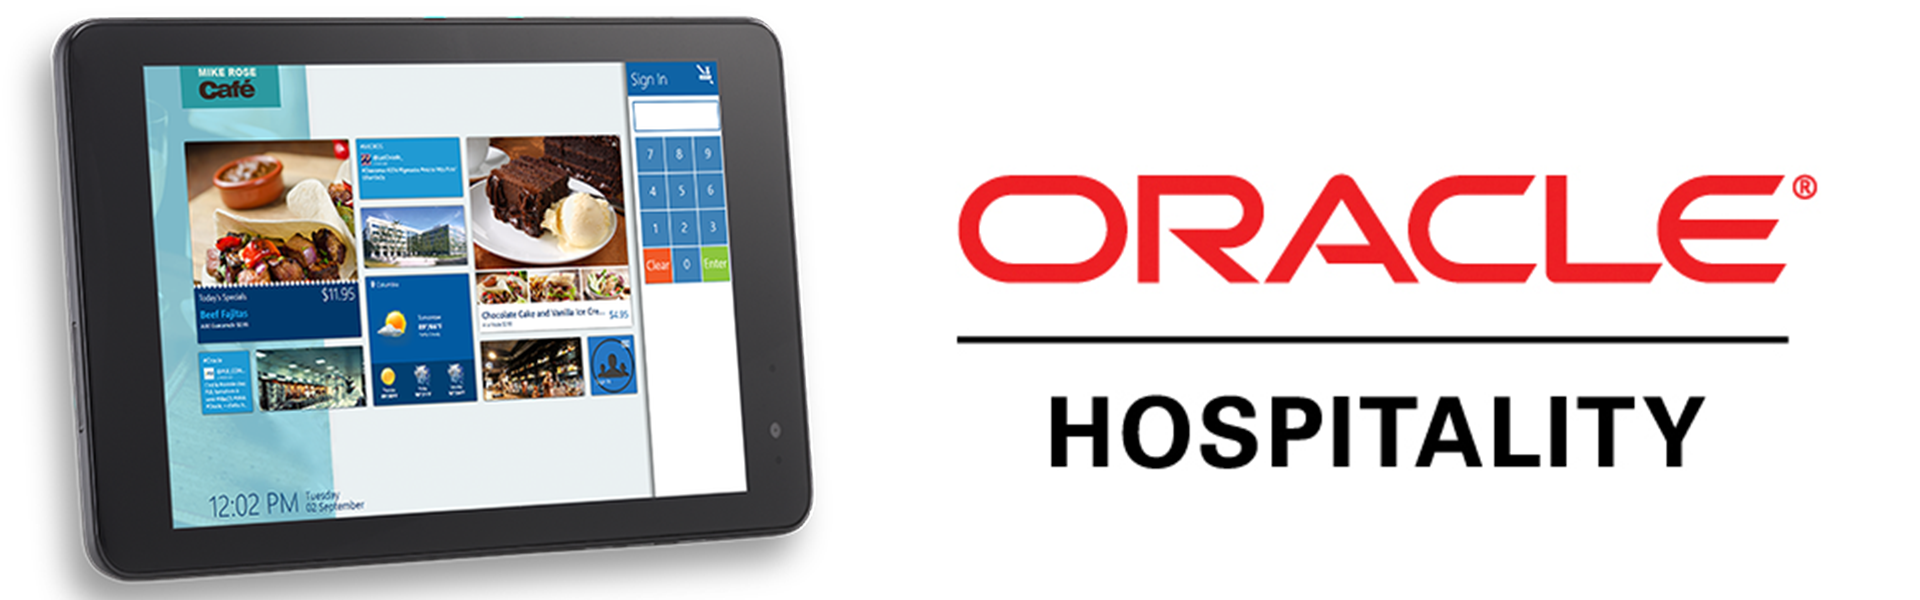 Partnership with Oracle Hospitality